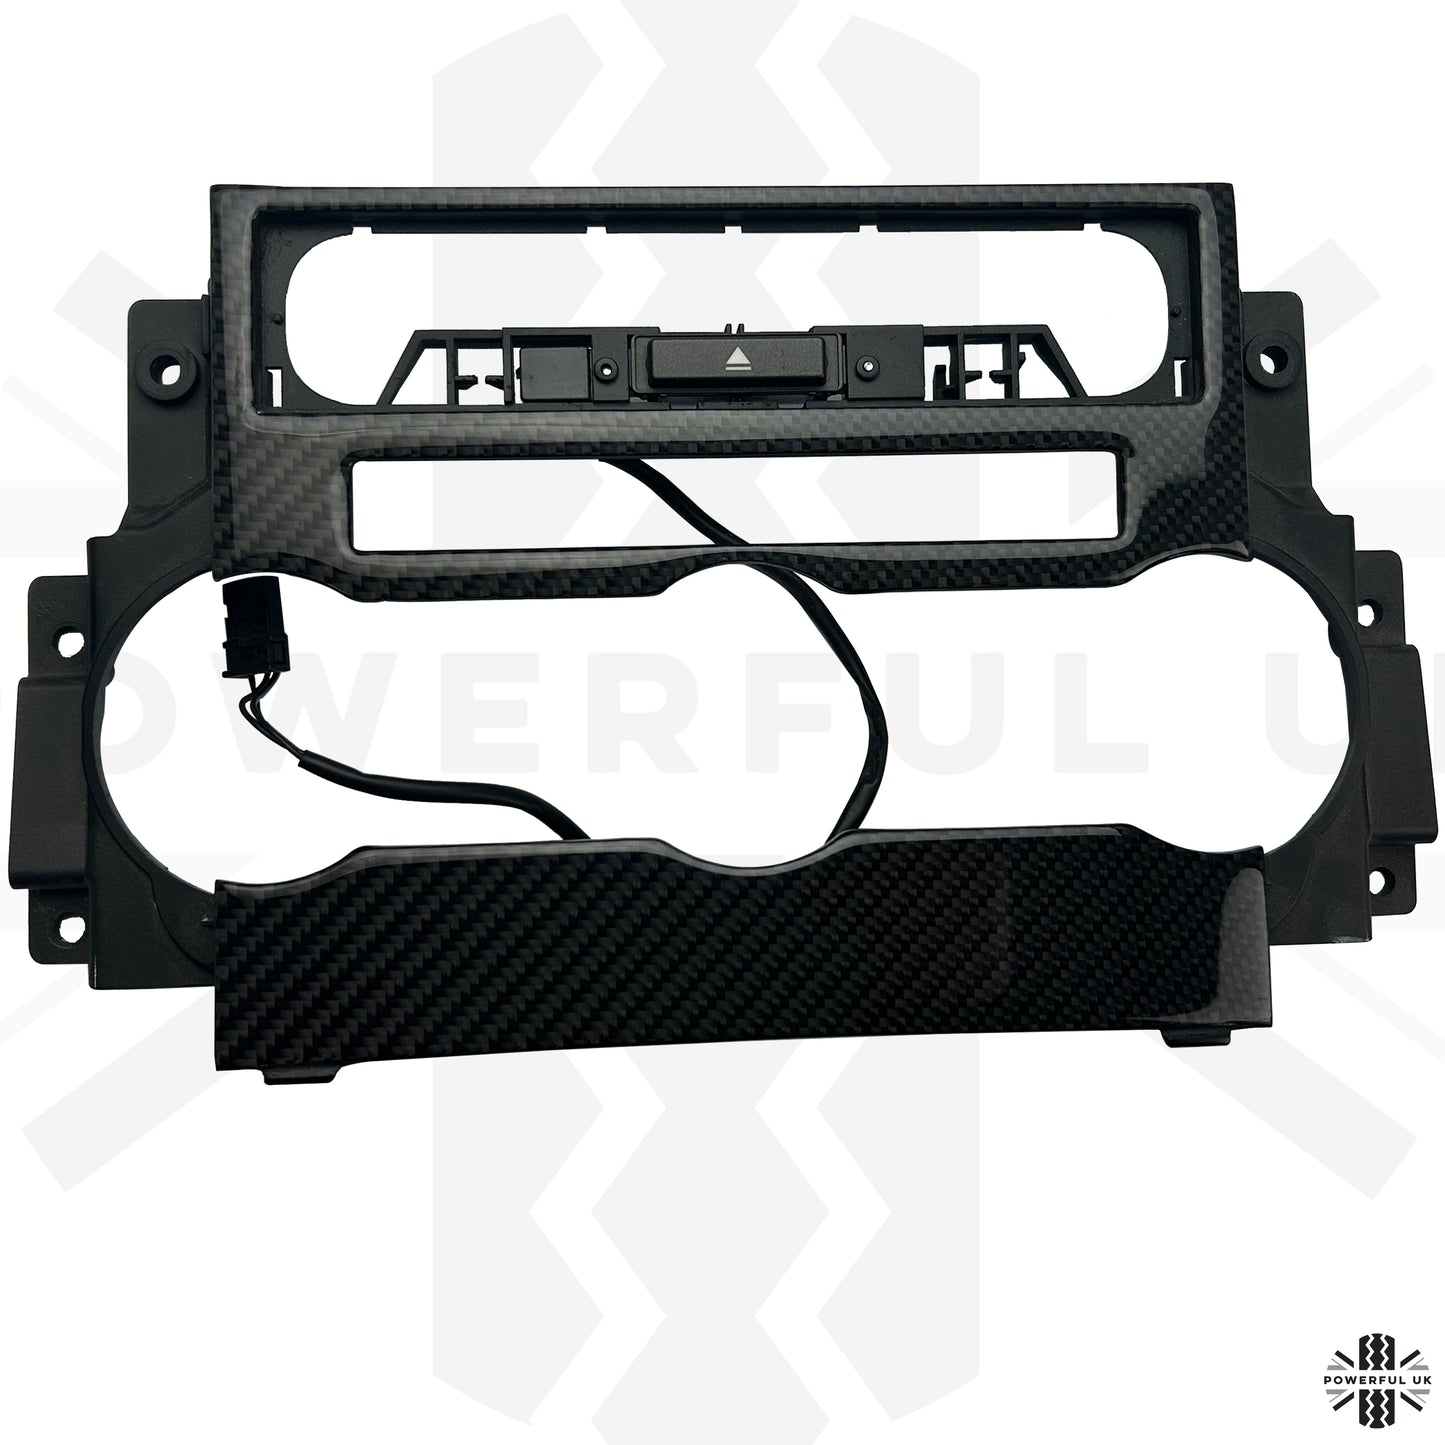 Centre Console Dash Heater Fascia Panel in Carbon Fibre for Range Rover Sport - Late Type